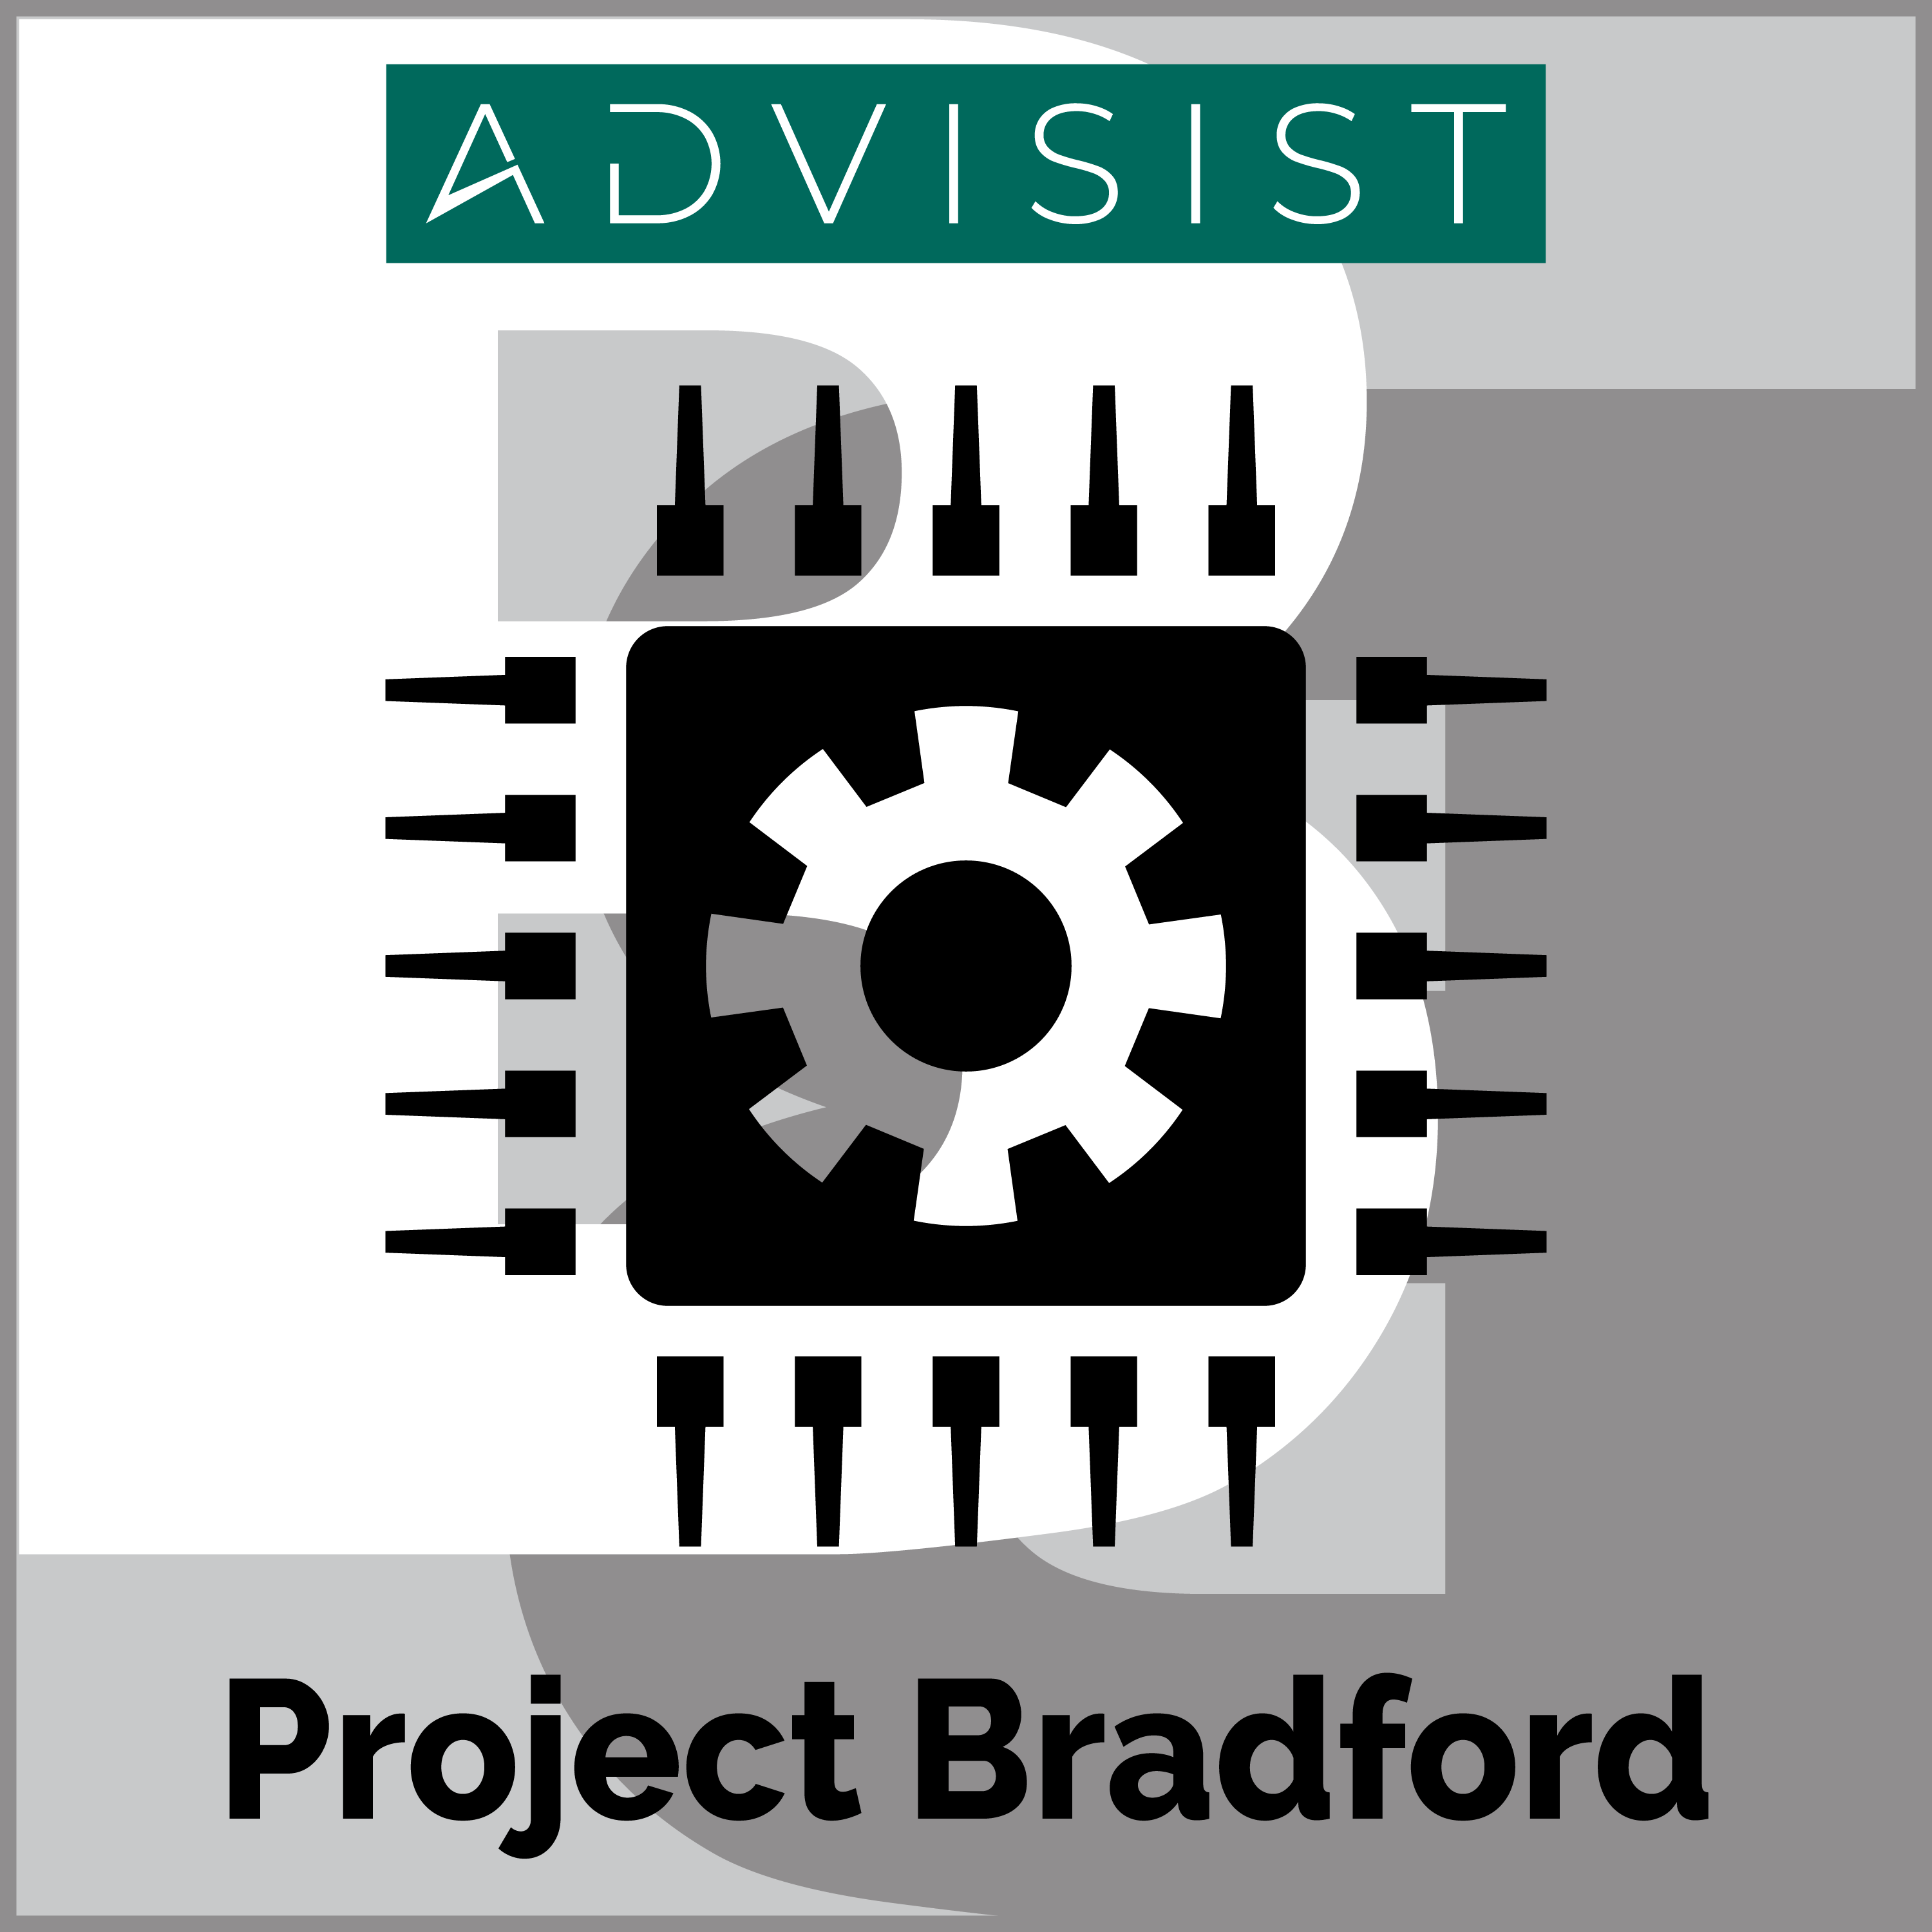 Project Bradford